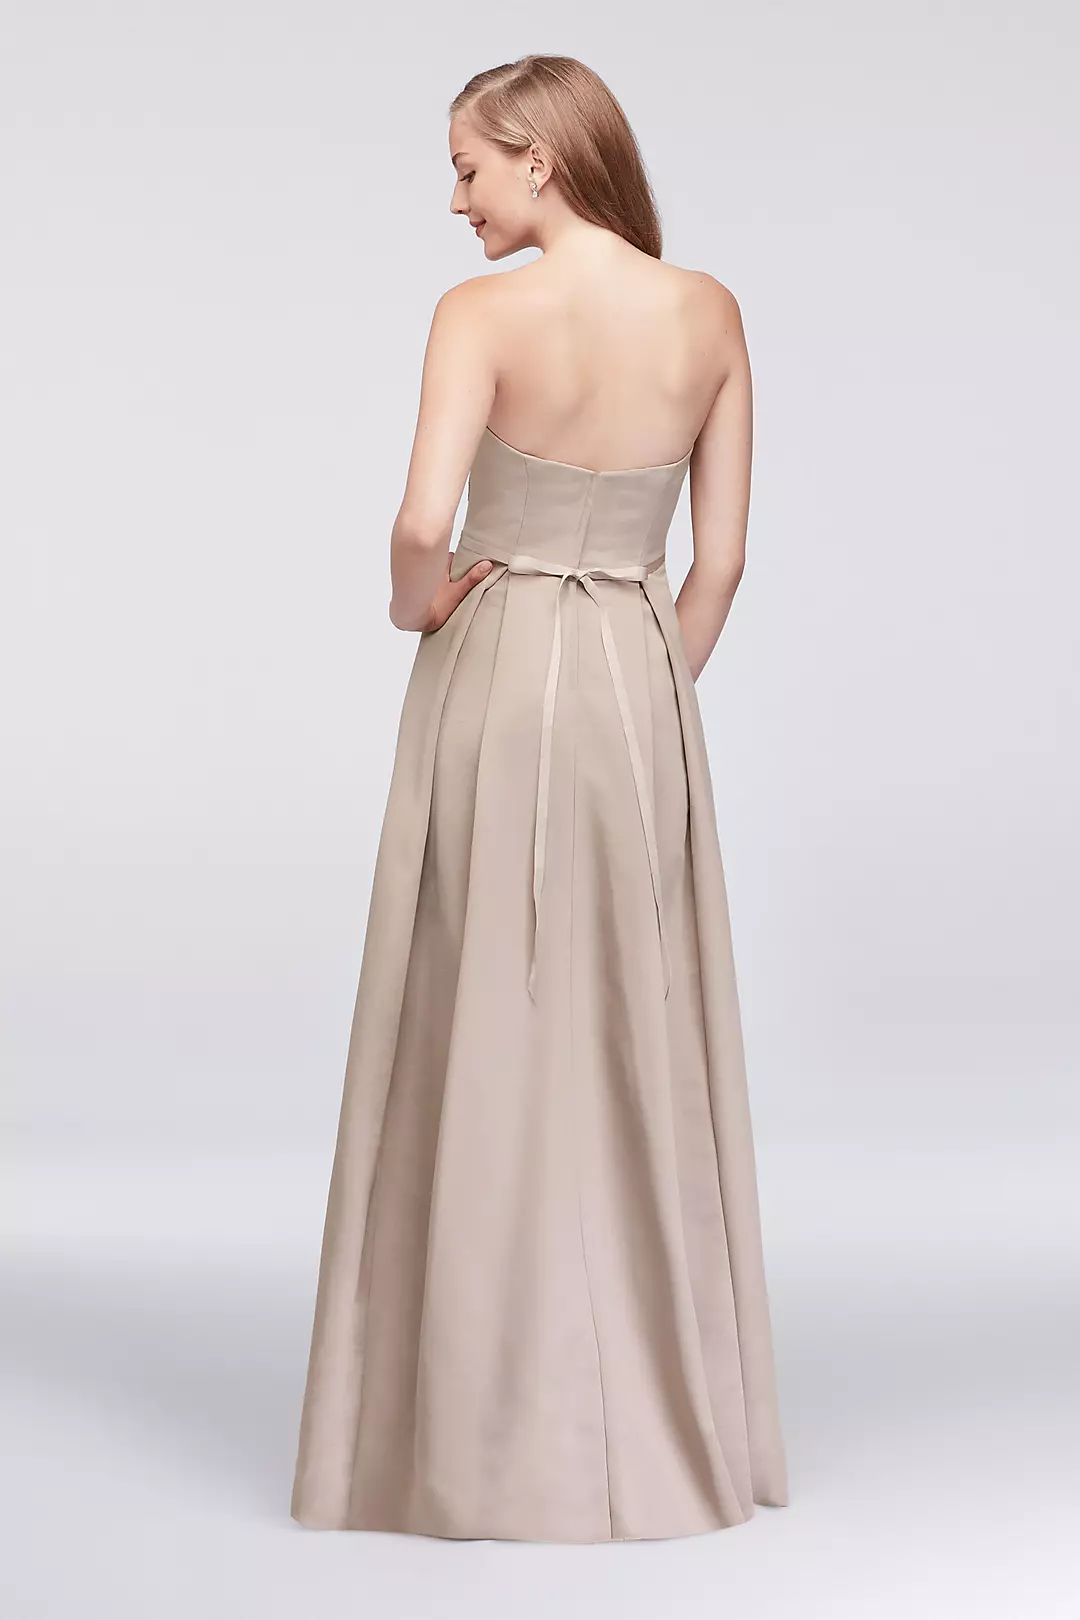 Appliqued Faille High-Low Bridesmaid Dress Image 2